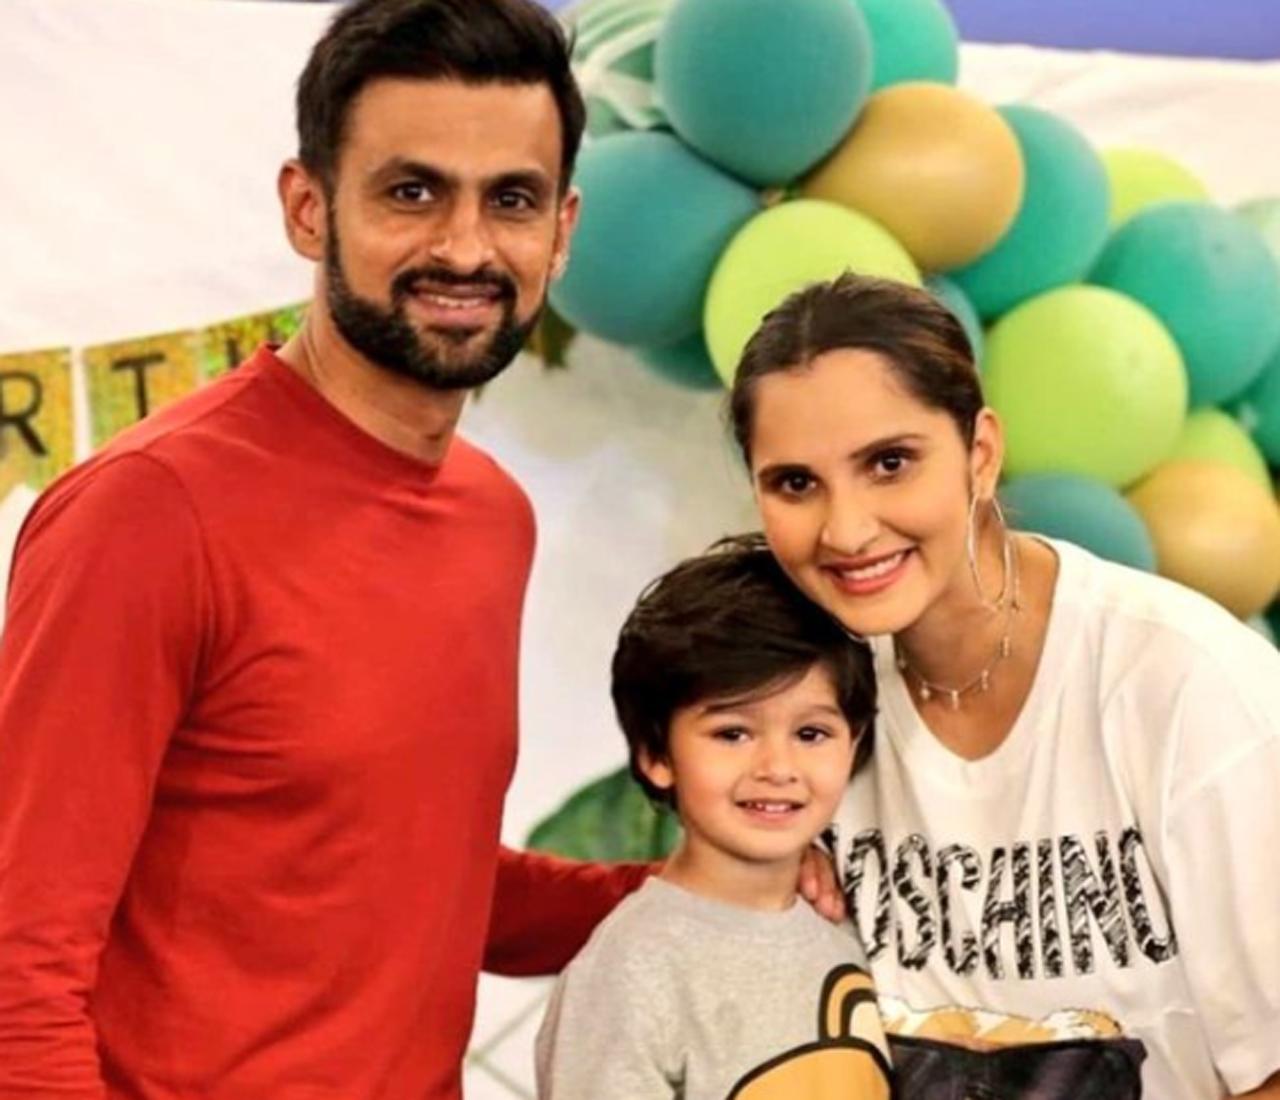 Shoaib Malik and Sania Mirza welcomed their son Izhaan Mirza Malik on October 30, 2018.